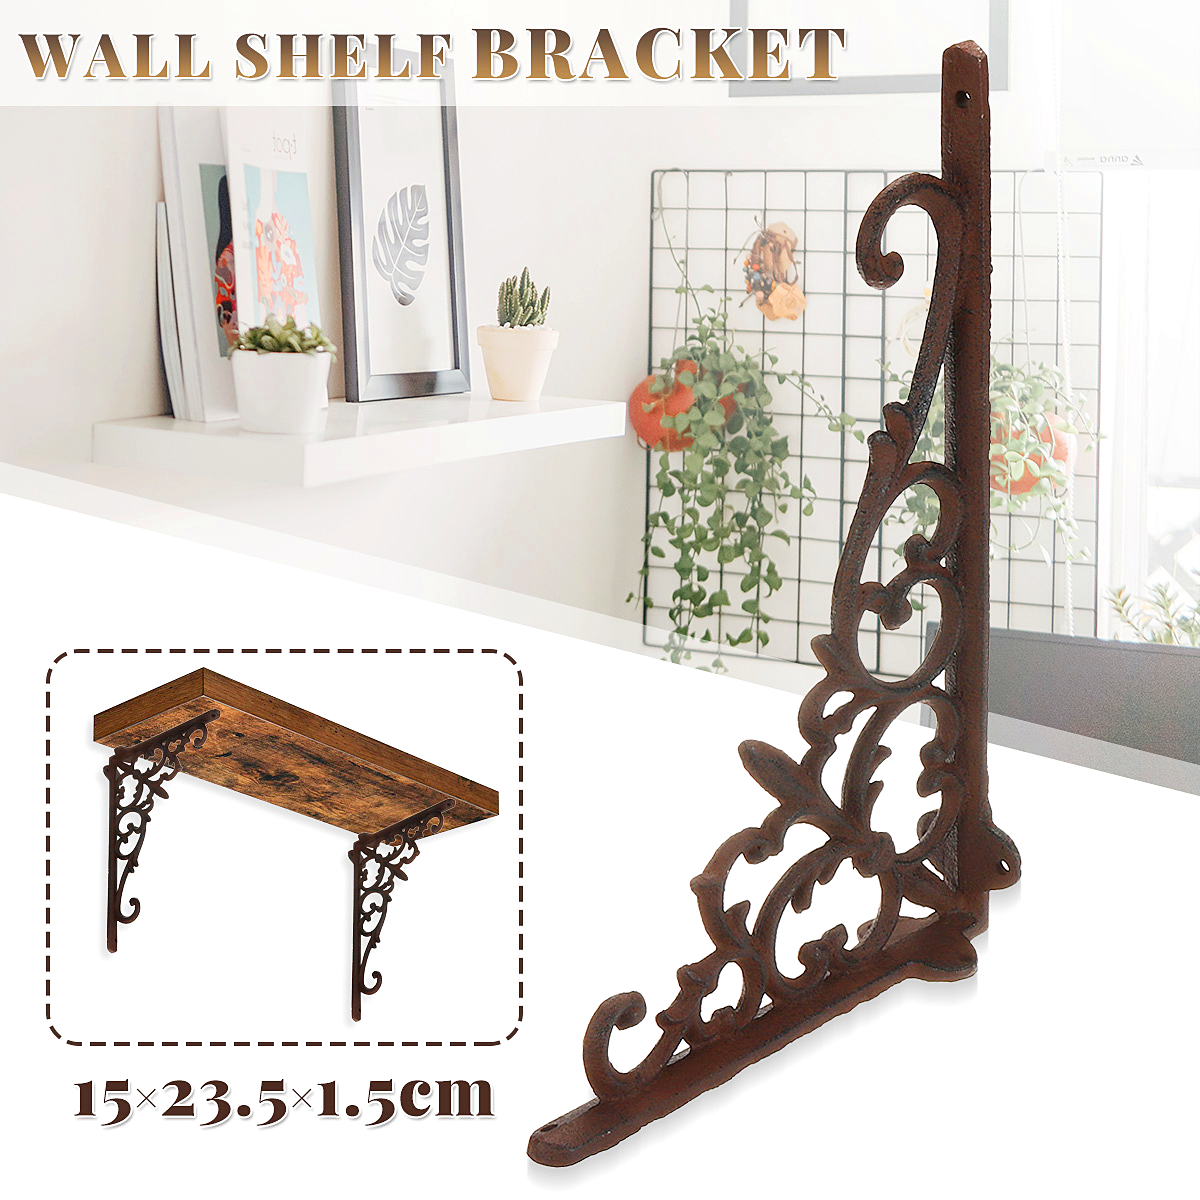 Retro-Industrial-Cast-Iron-Shelf-Bracket-Wall-Mounted-Shelf-Supporter-Garden-1571314-1